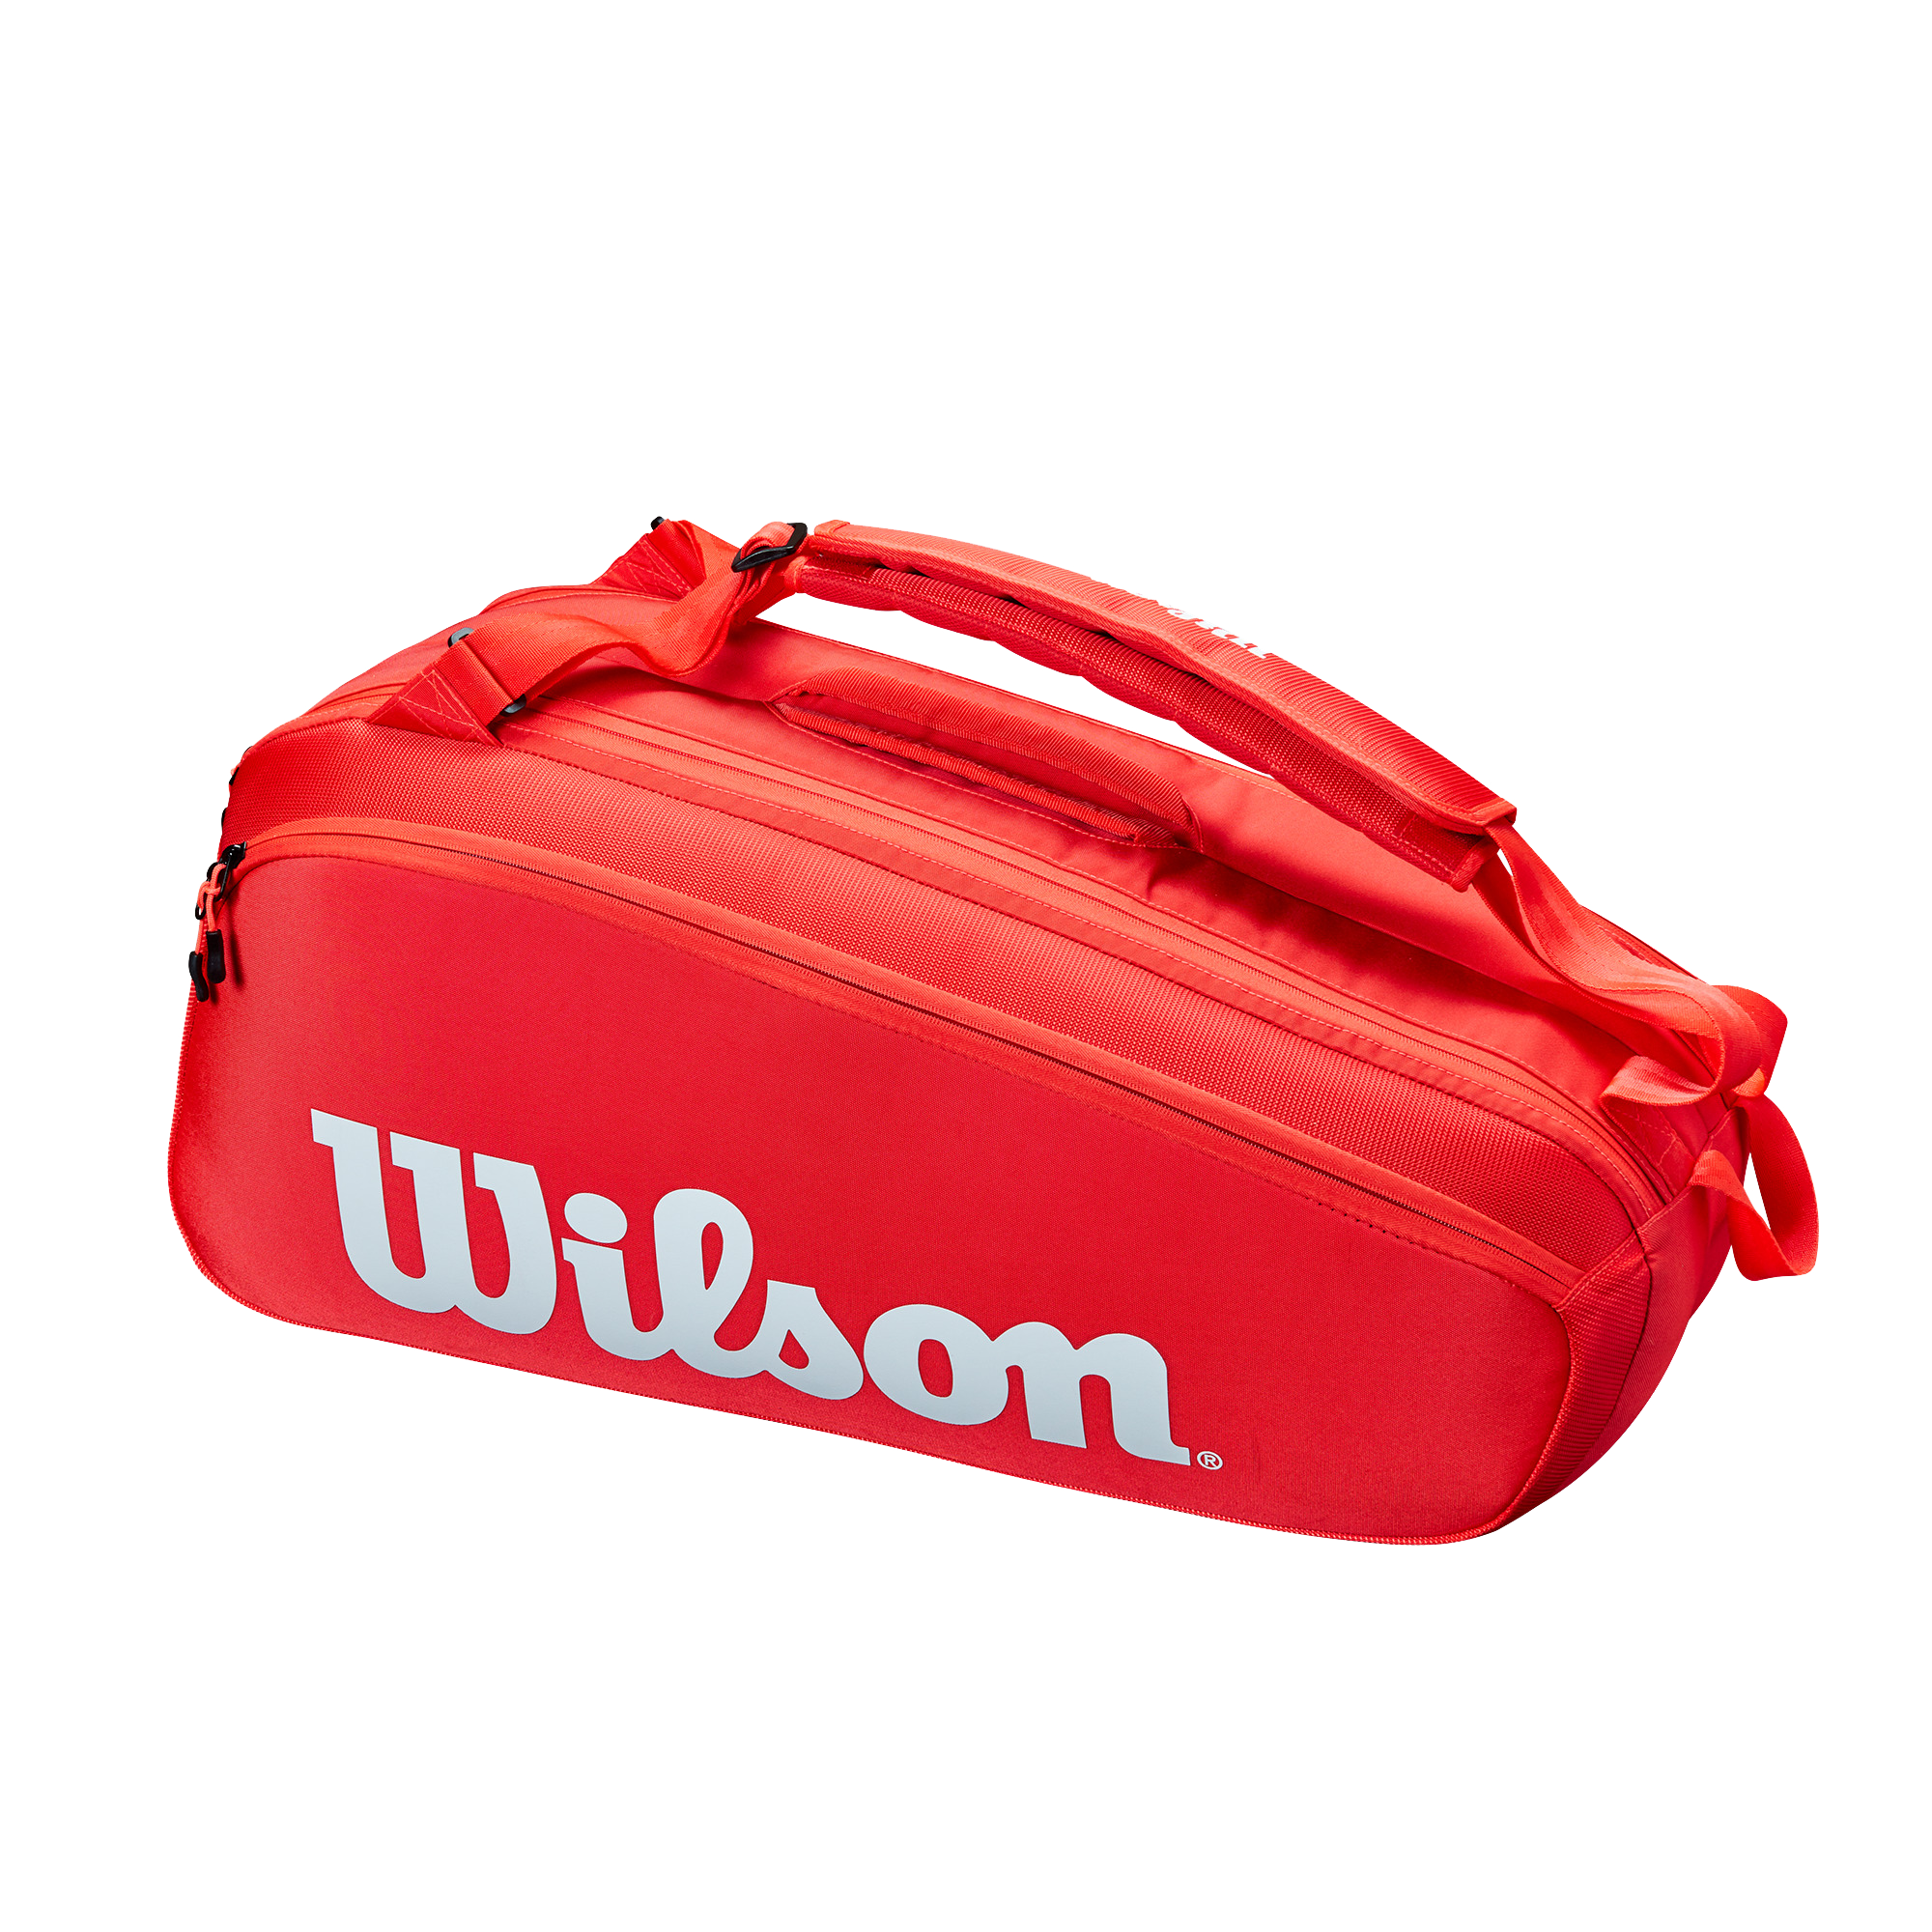 Outdoors & Sports Equipment Wilson Classic Tennis Racket Bag Accessory Storage 